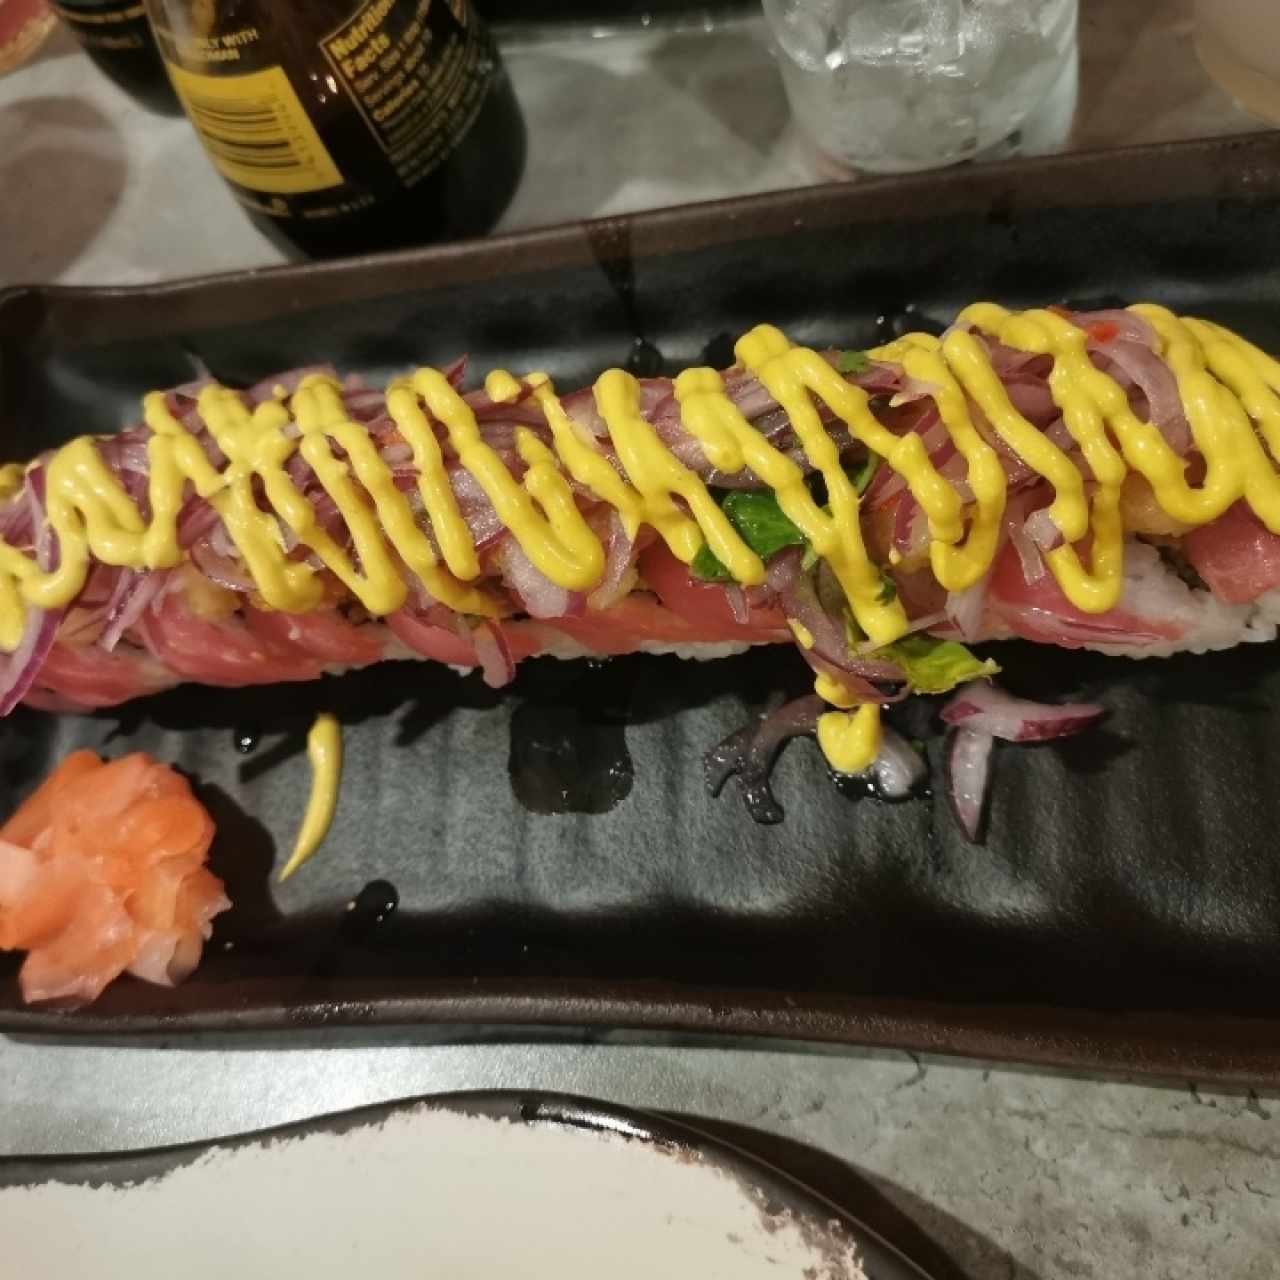 Sushi acevichado